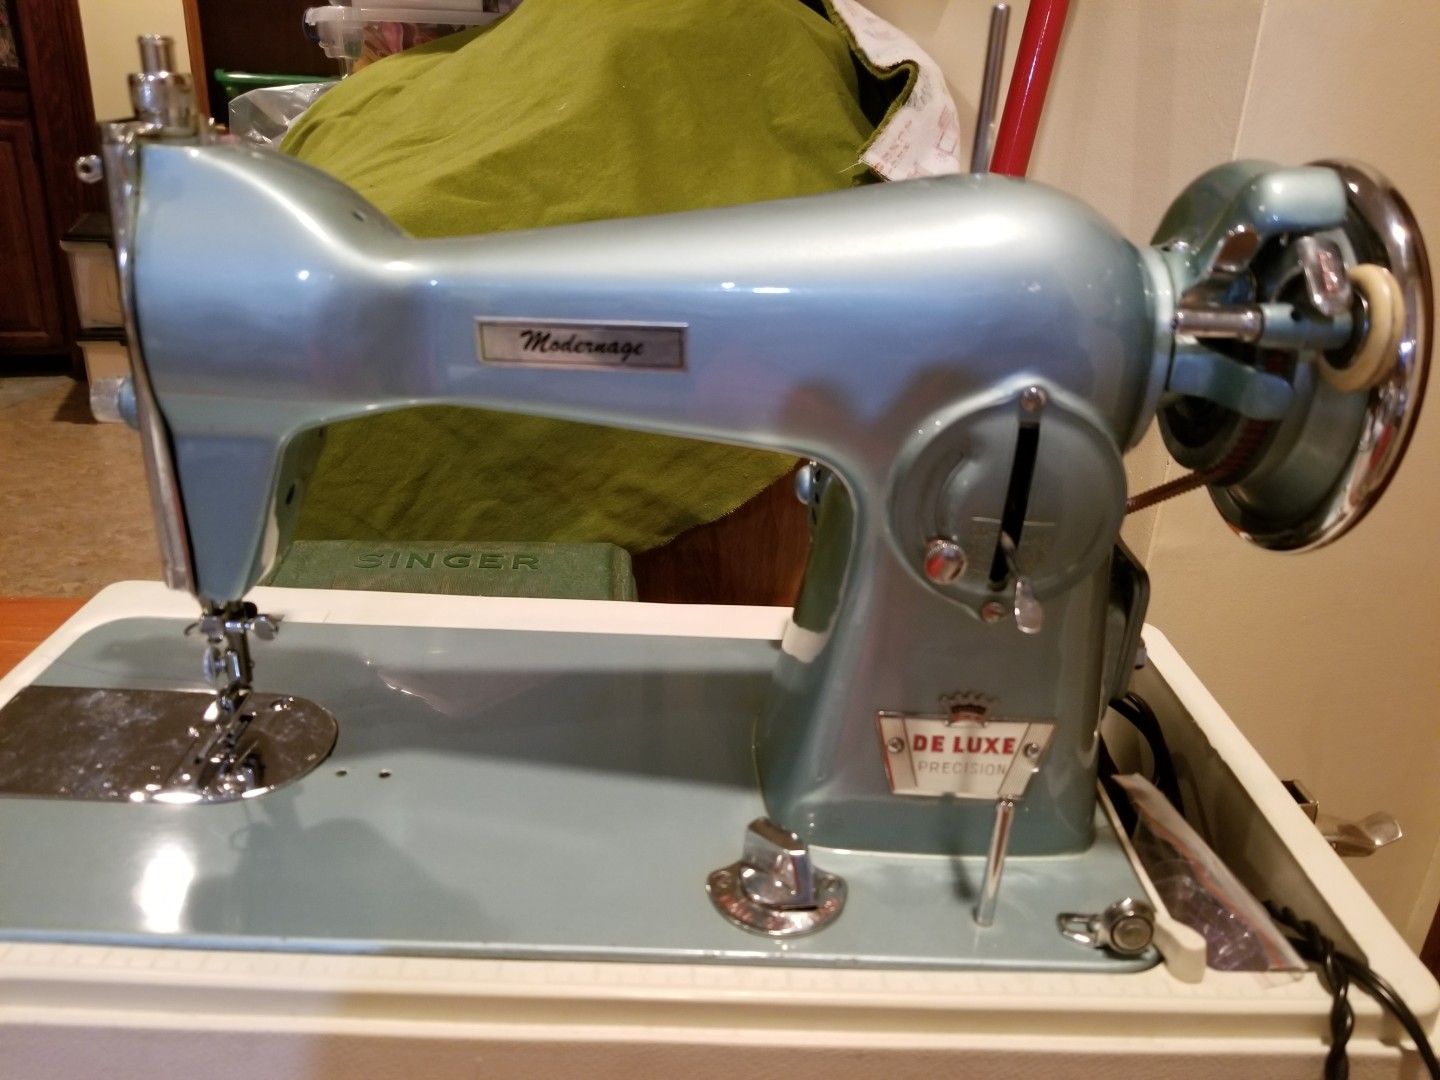 Gorgeous blue sewing machine-singer clone